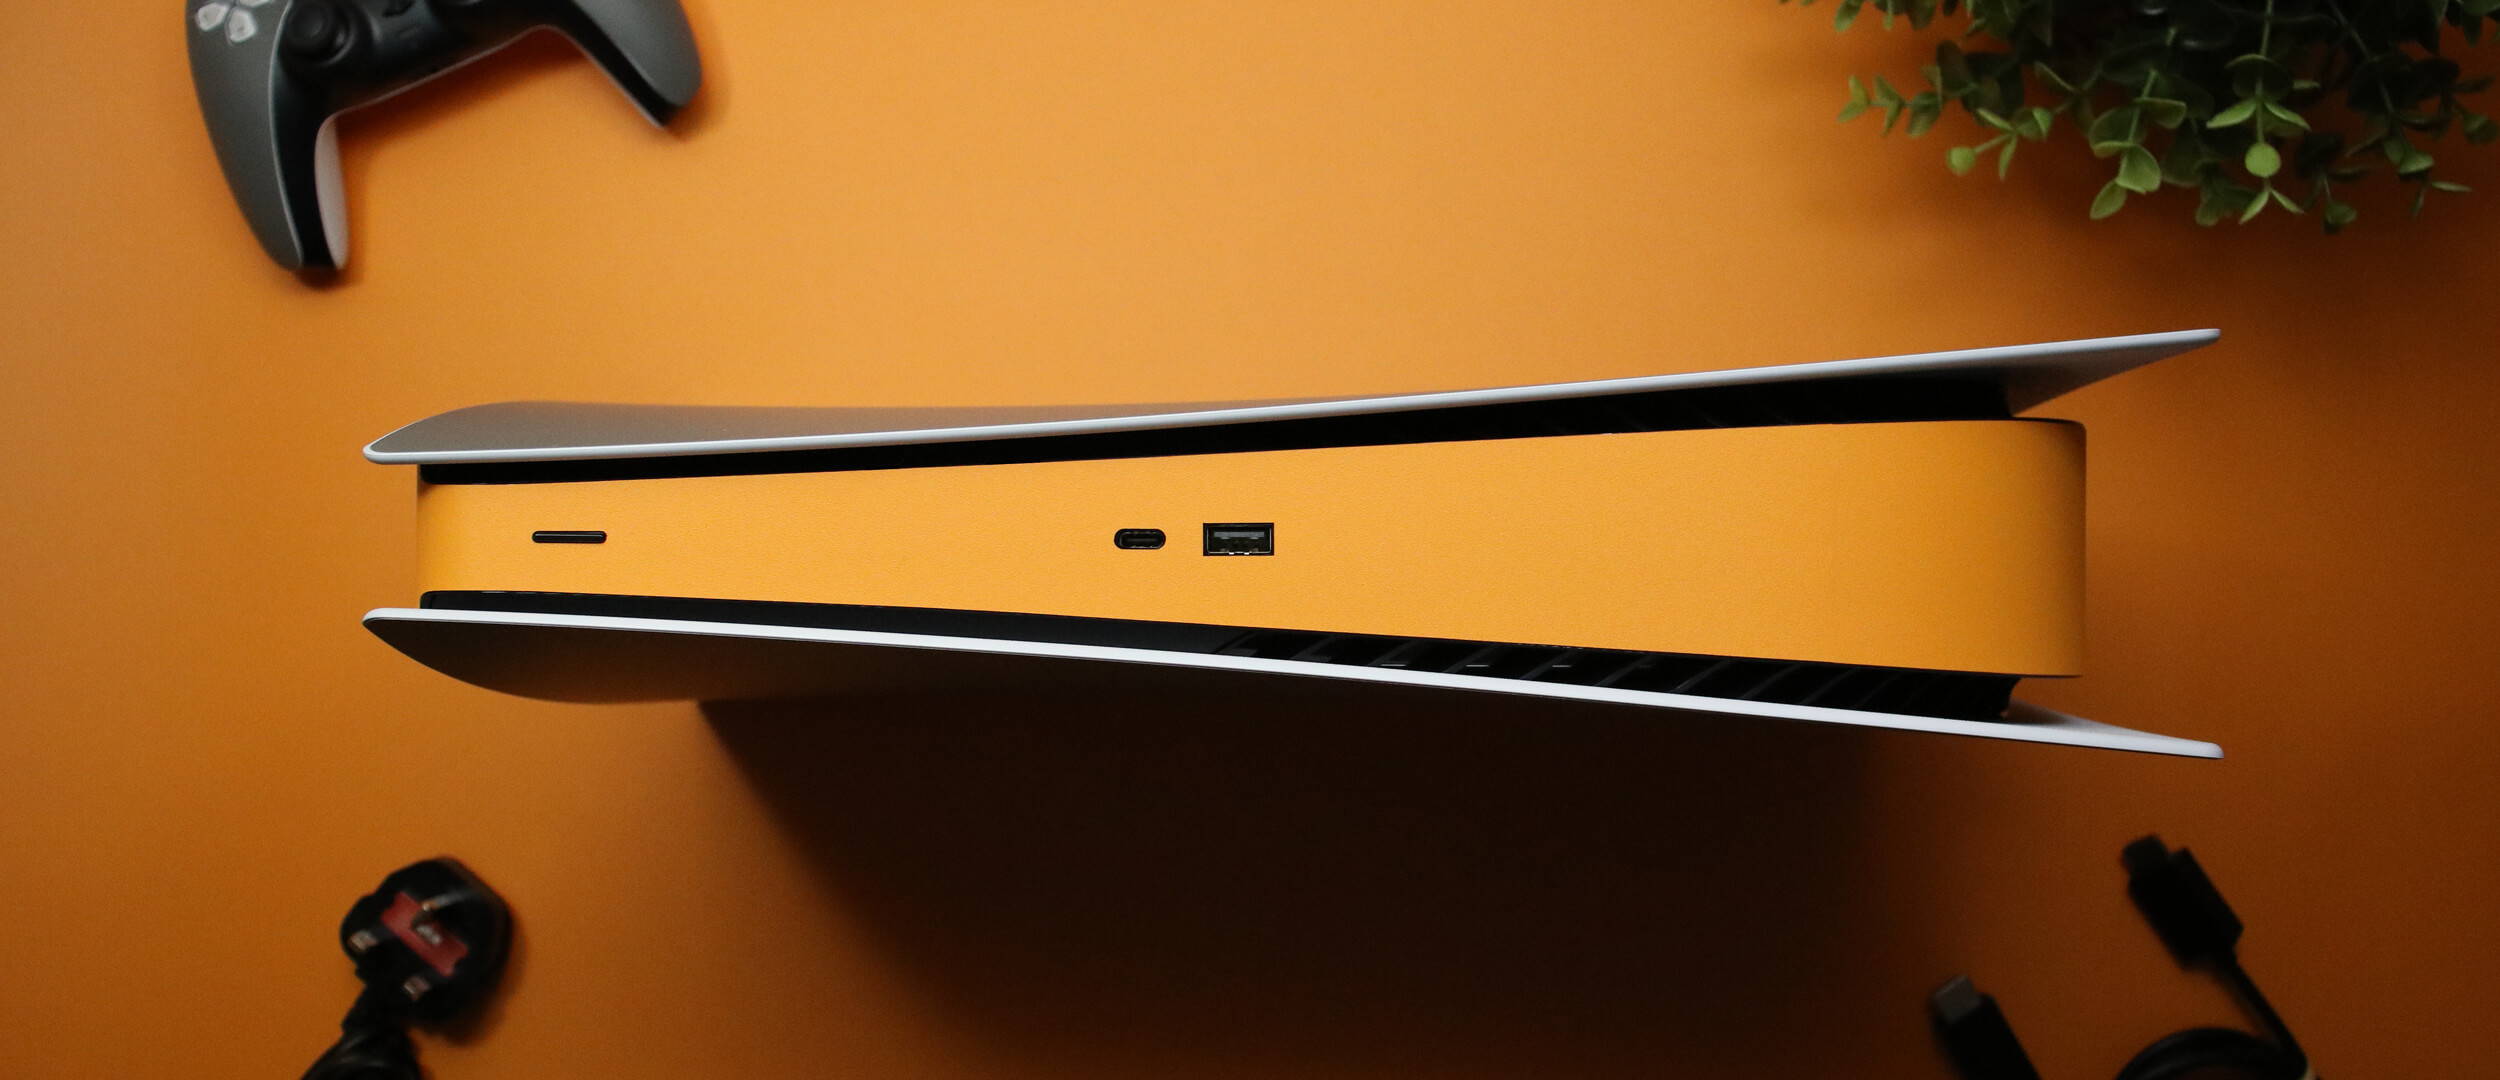 PS5 Digital Edition Textured matt orange skins